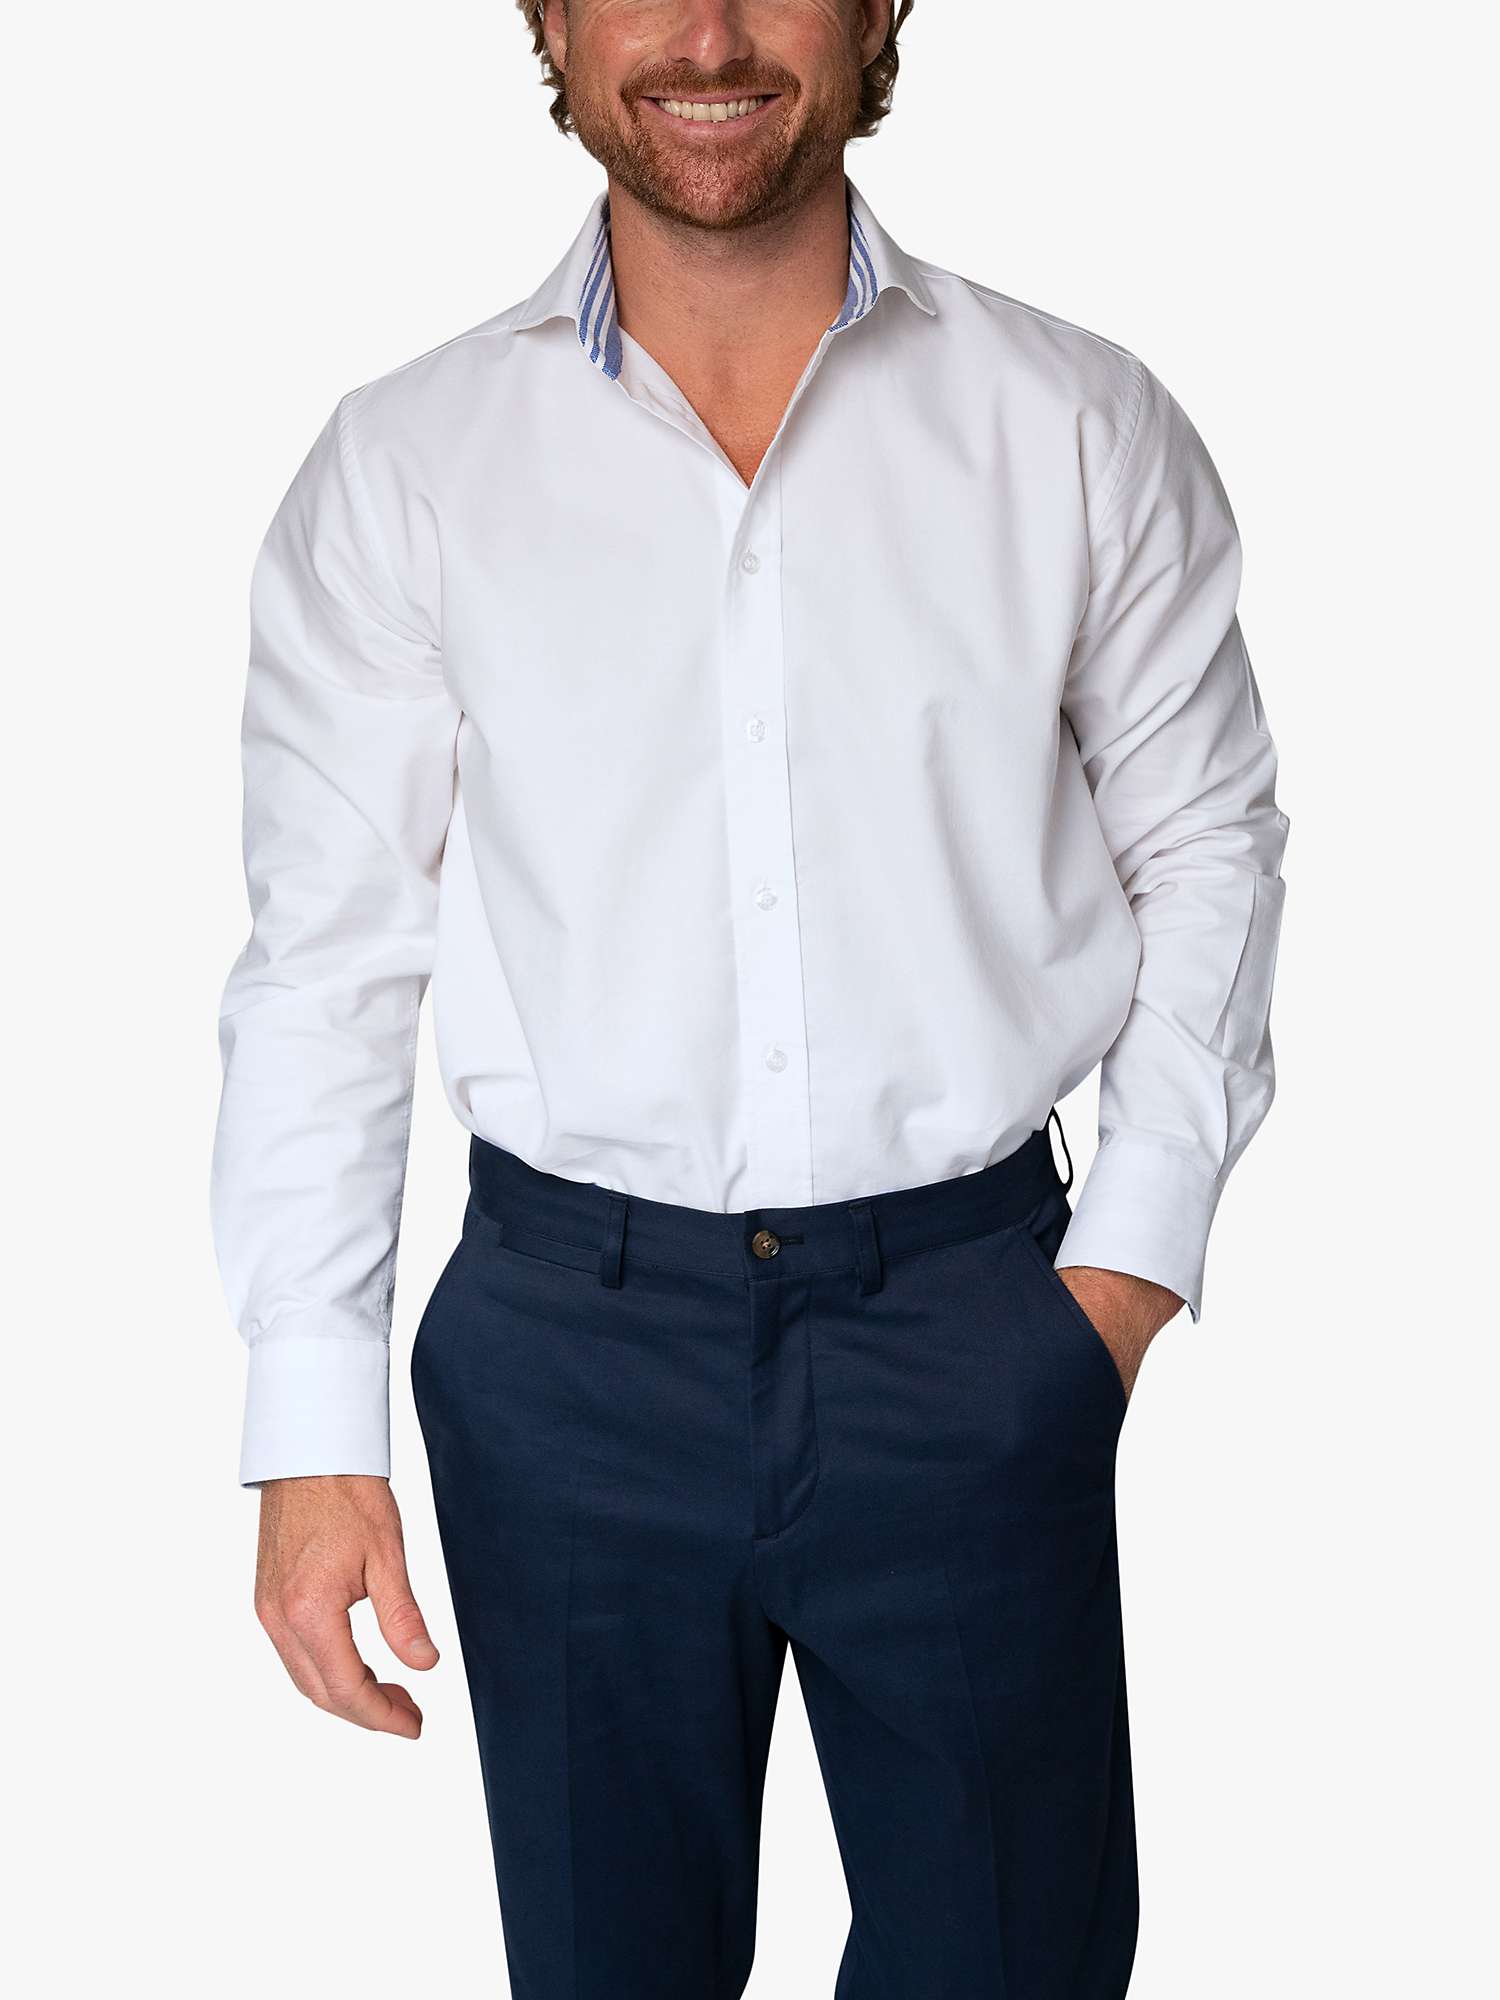 Buy KOY Organic Cotton Oxford Shirt, White Online at johnlewis.com